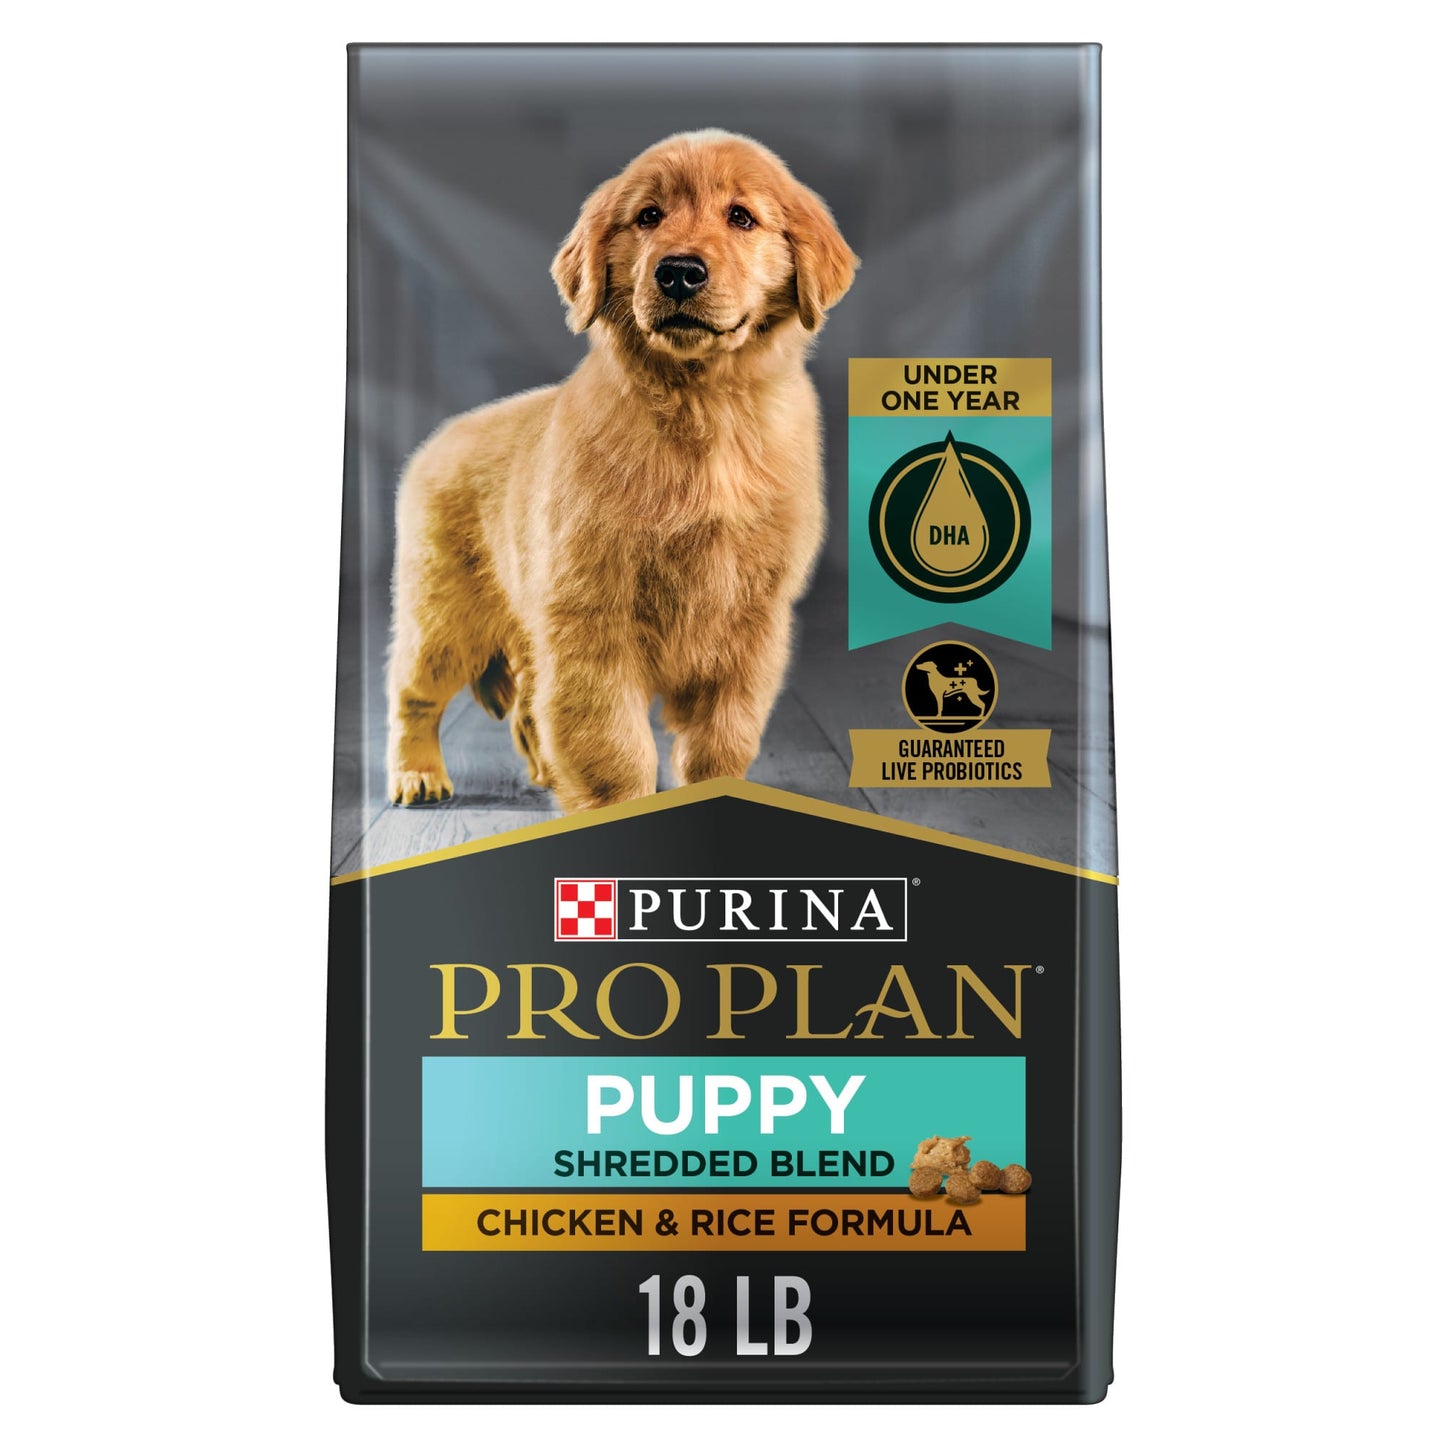 Purina Pro Plan High Protein Puppy Food Shredded Blend Chicken & Rice Formula  18 lb. Bag